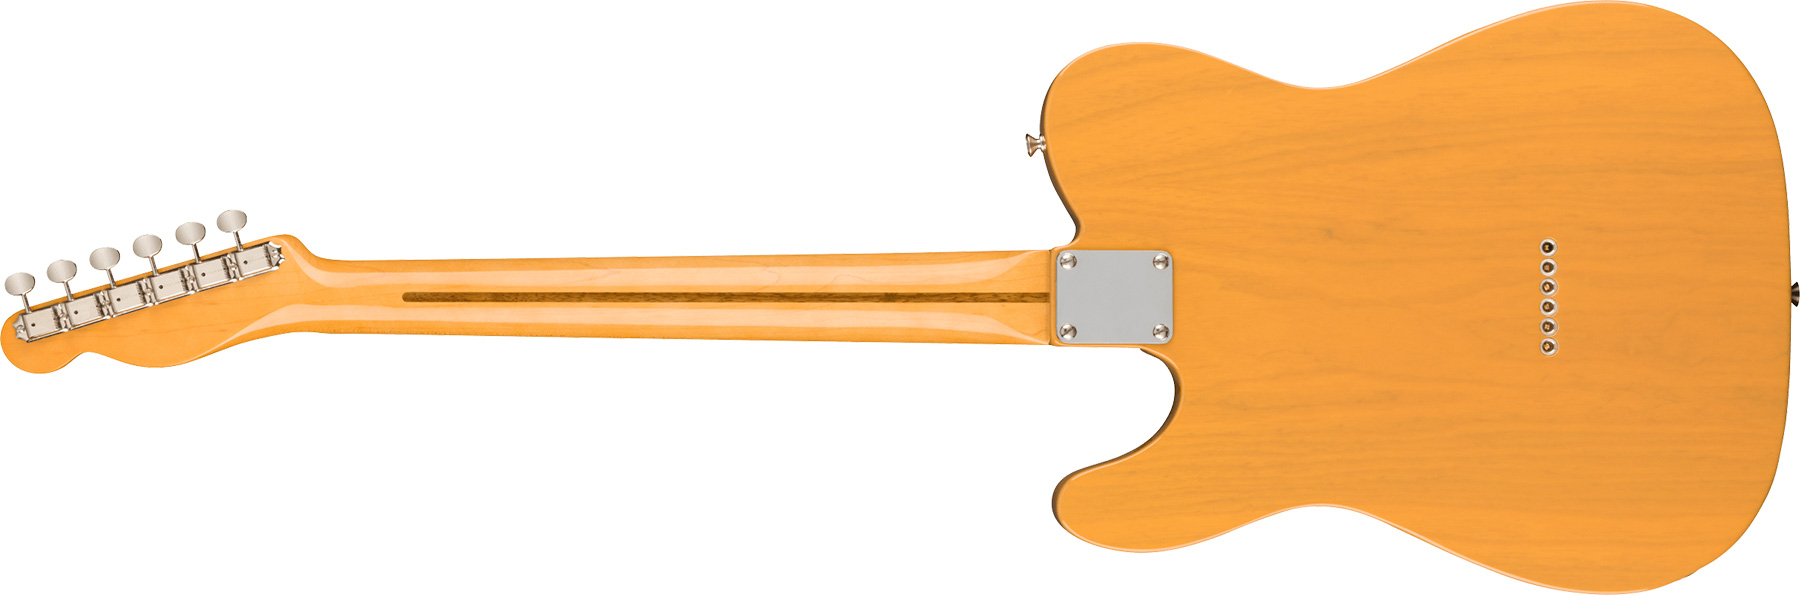 Fender Tele 1951 American Vintage Ii Usa 2s Ht Mn - Butterscotch Blonde - Guitarra eléctrica con forma de tel - Variation 1